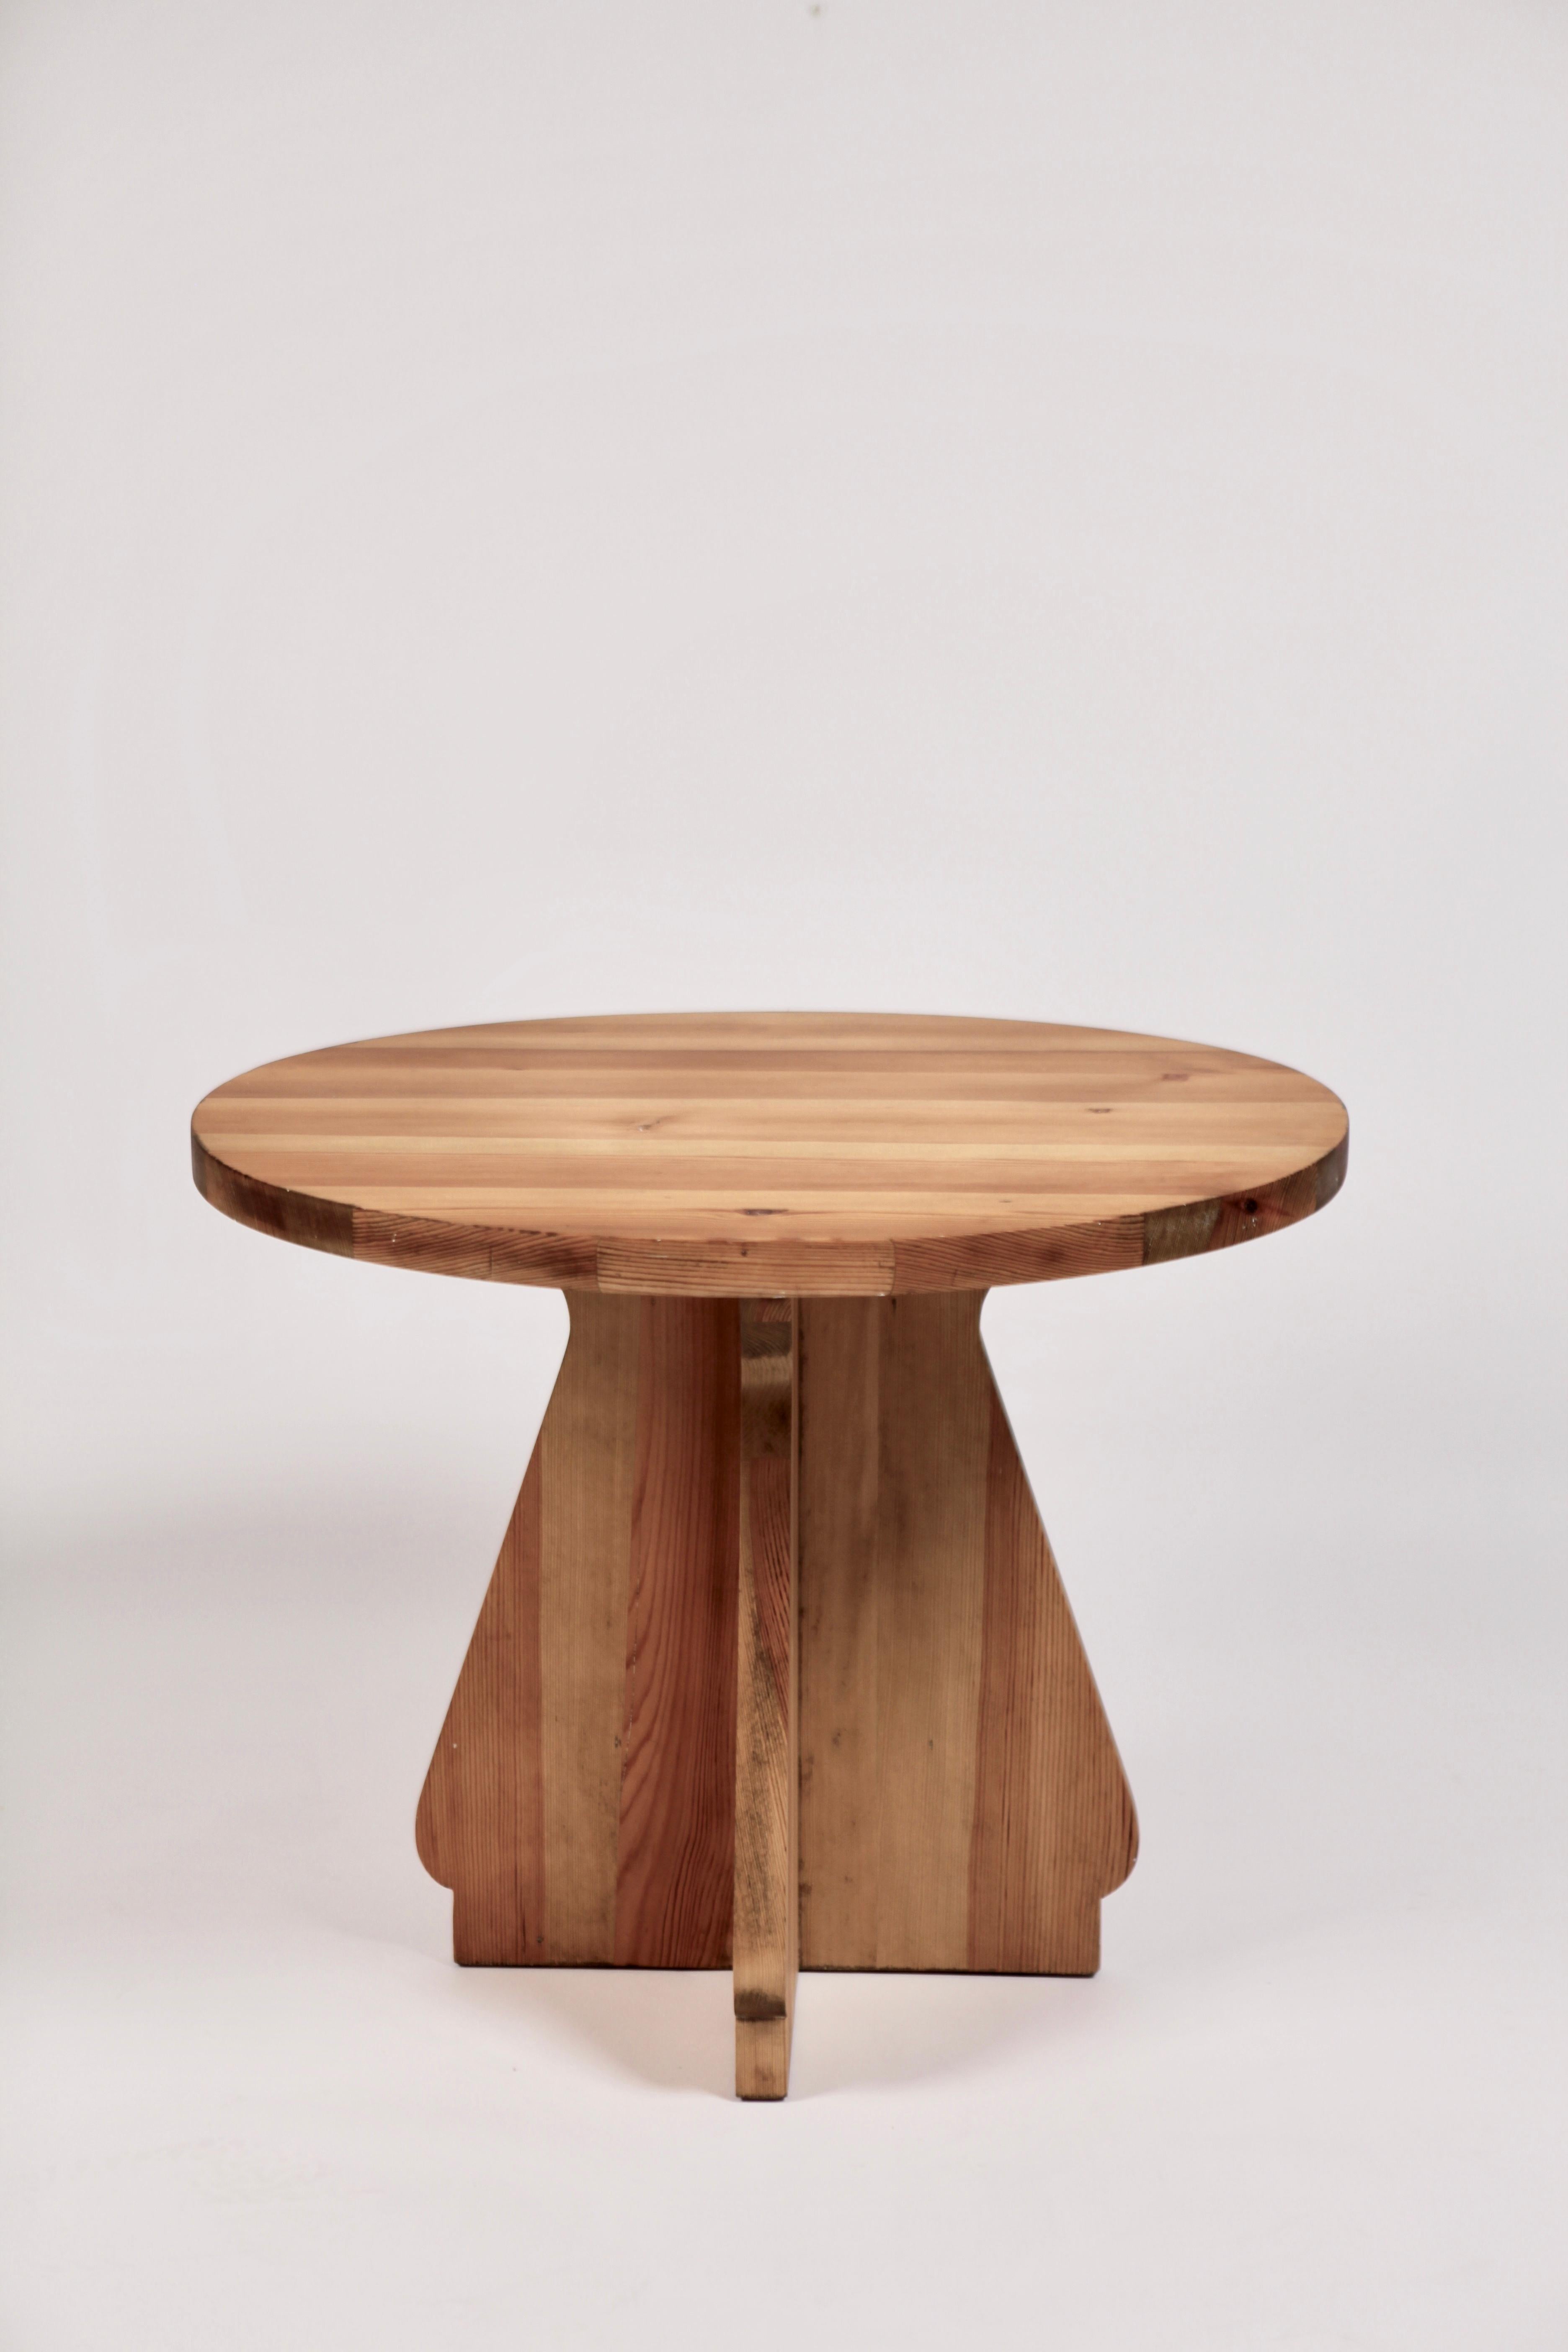 Scandinavian Modern Nordiska Kompaniet, Pine Table, Attributed to Axel Einar Hjorth, Sweden, 1940s